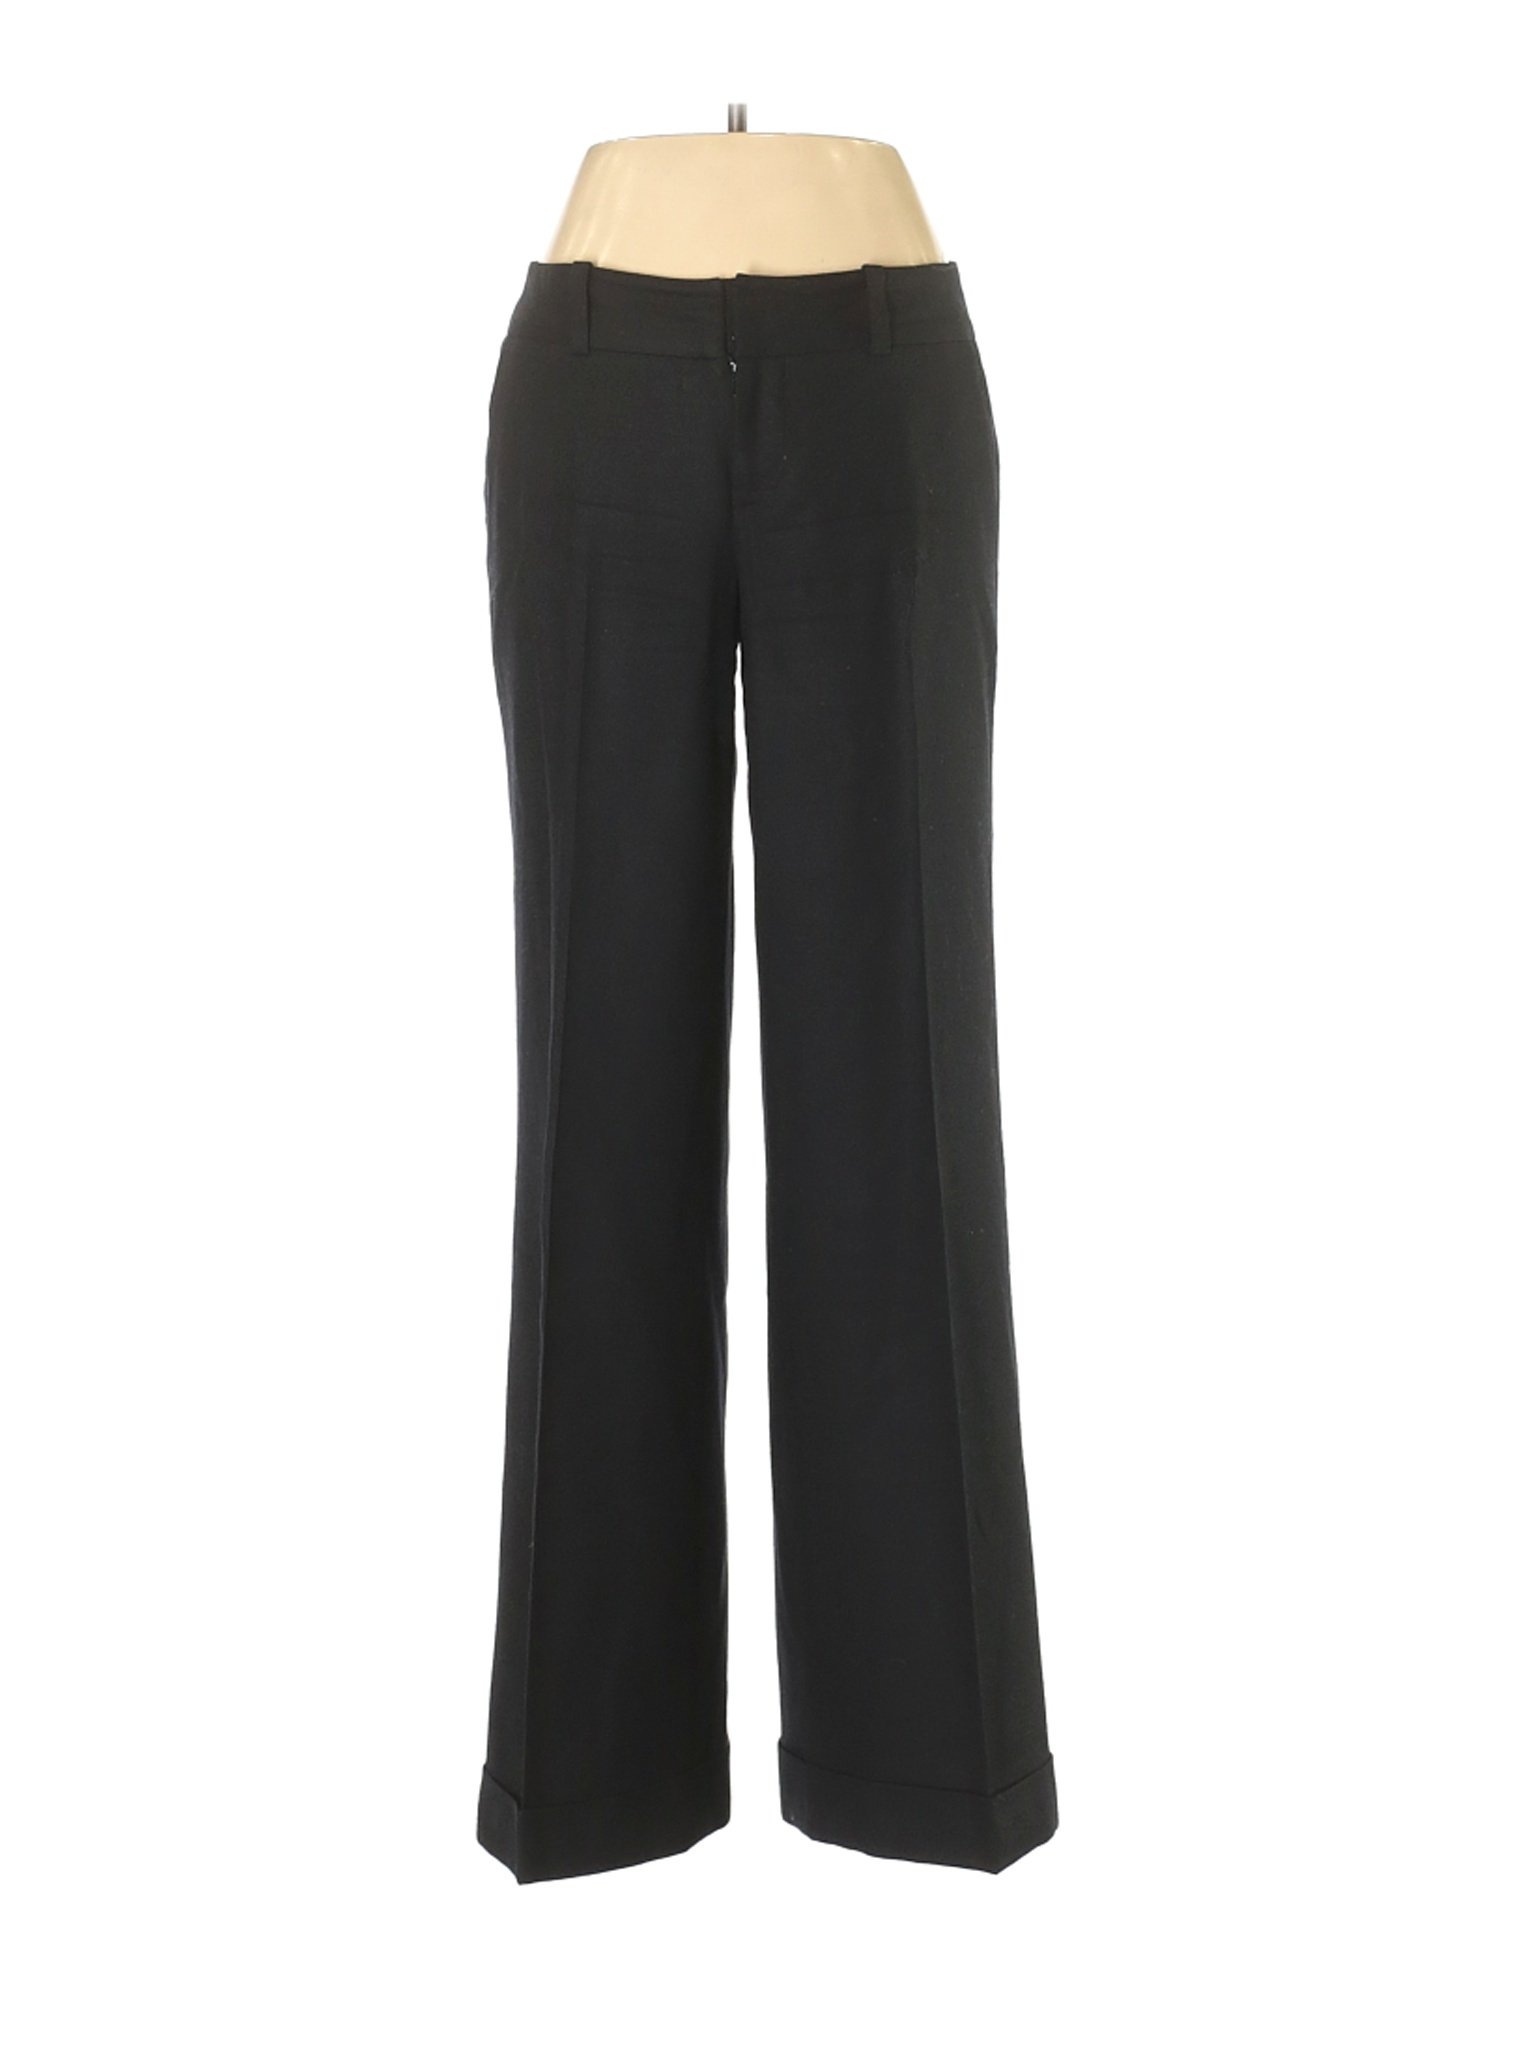 Club Monaco Women Black Wool Pants 2 | eBay